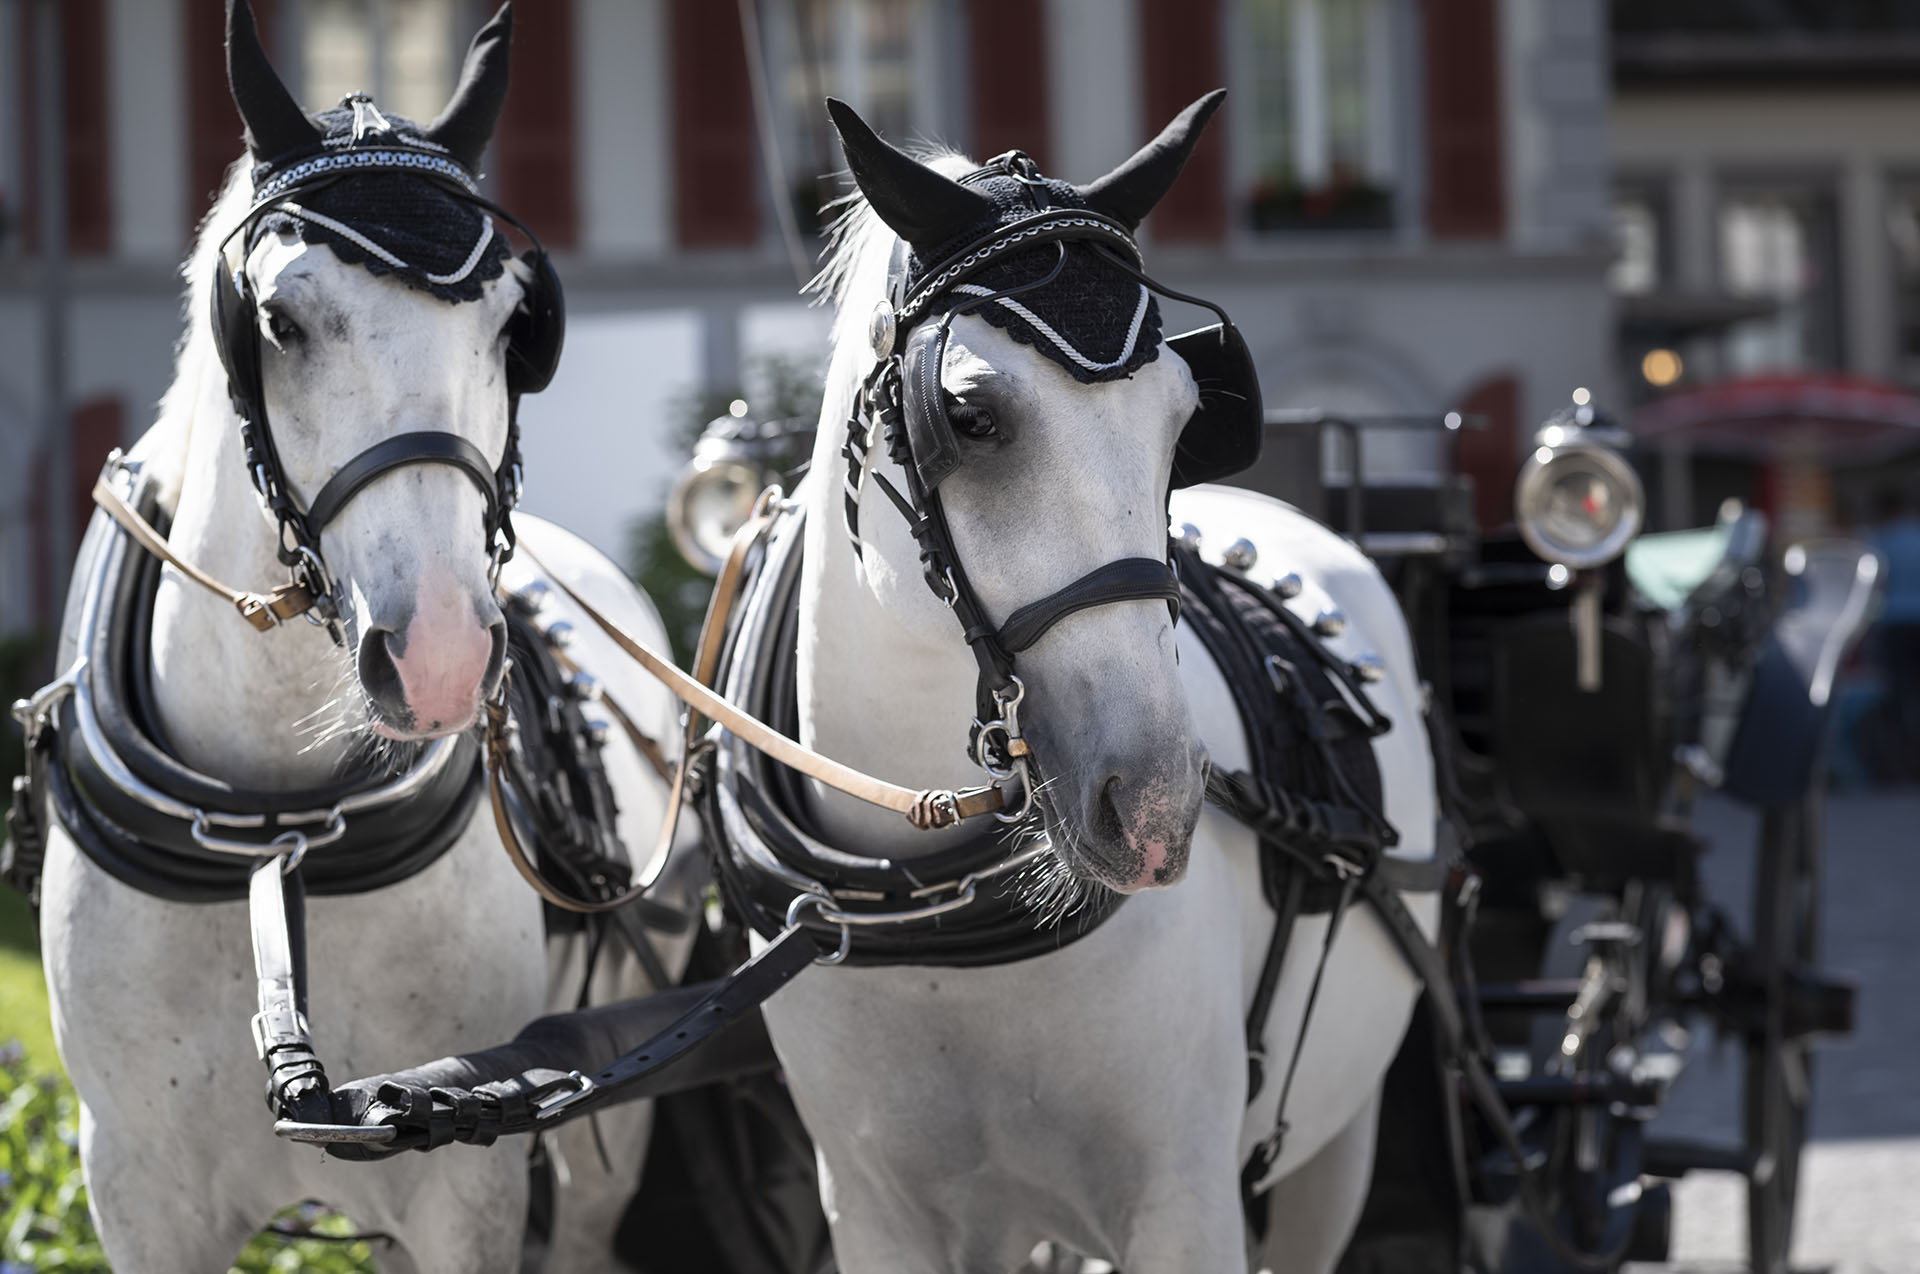 Lippizan Horses - Grand Hotel Zermatterhof